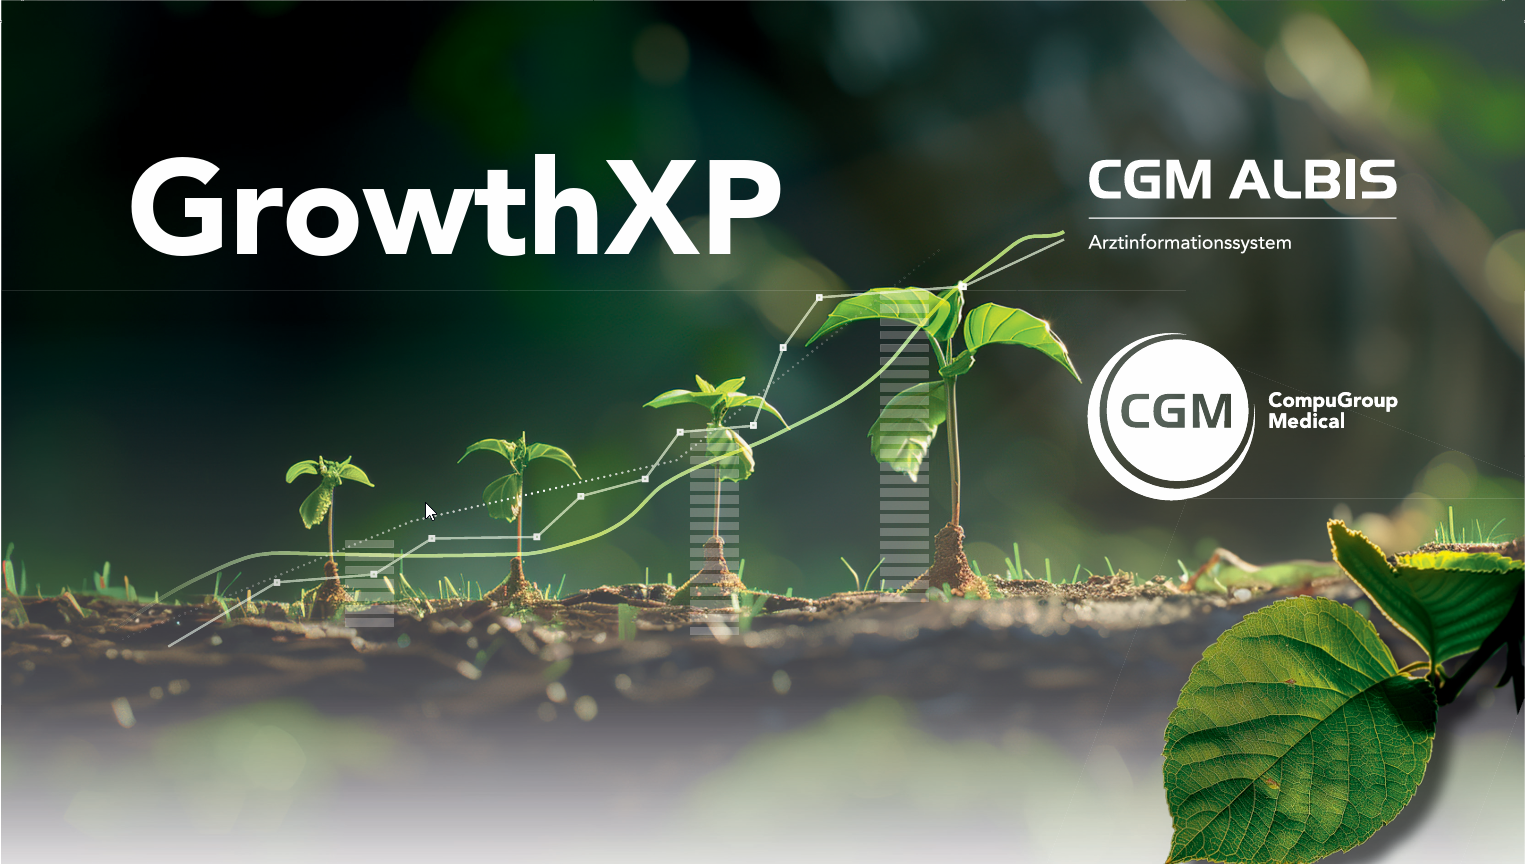 CGM ALBIS GrowthXP